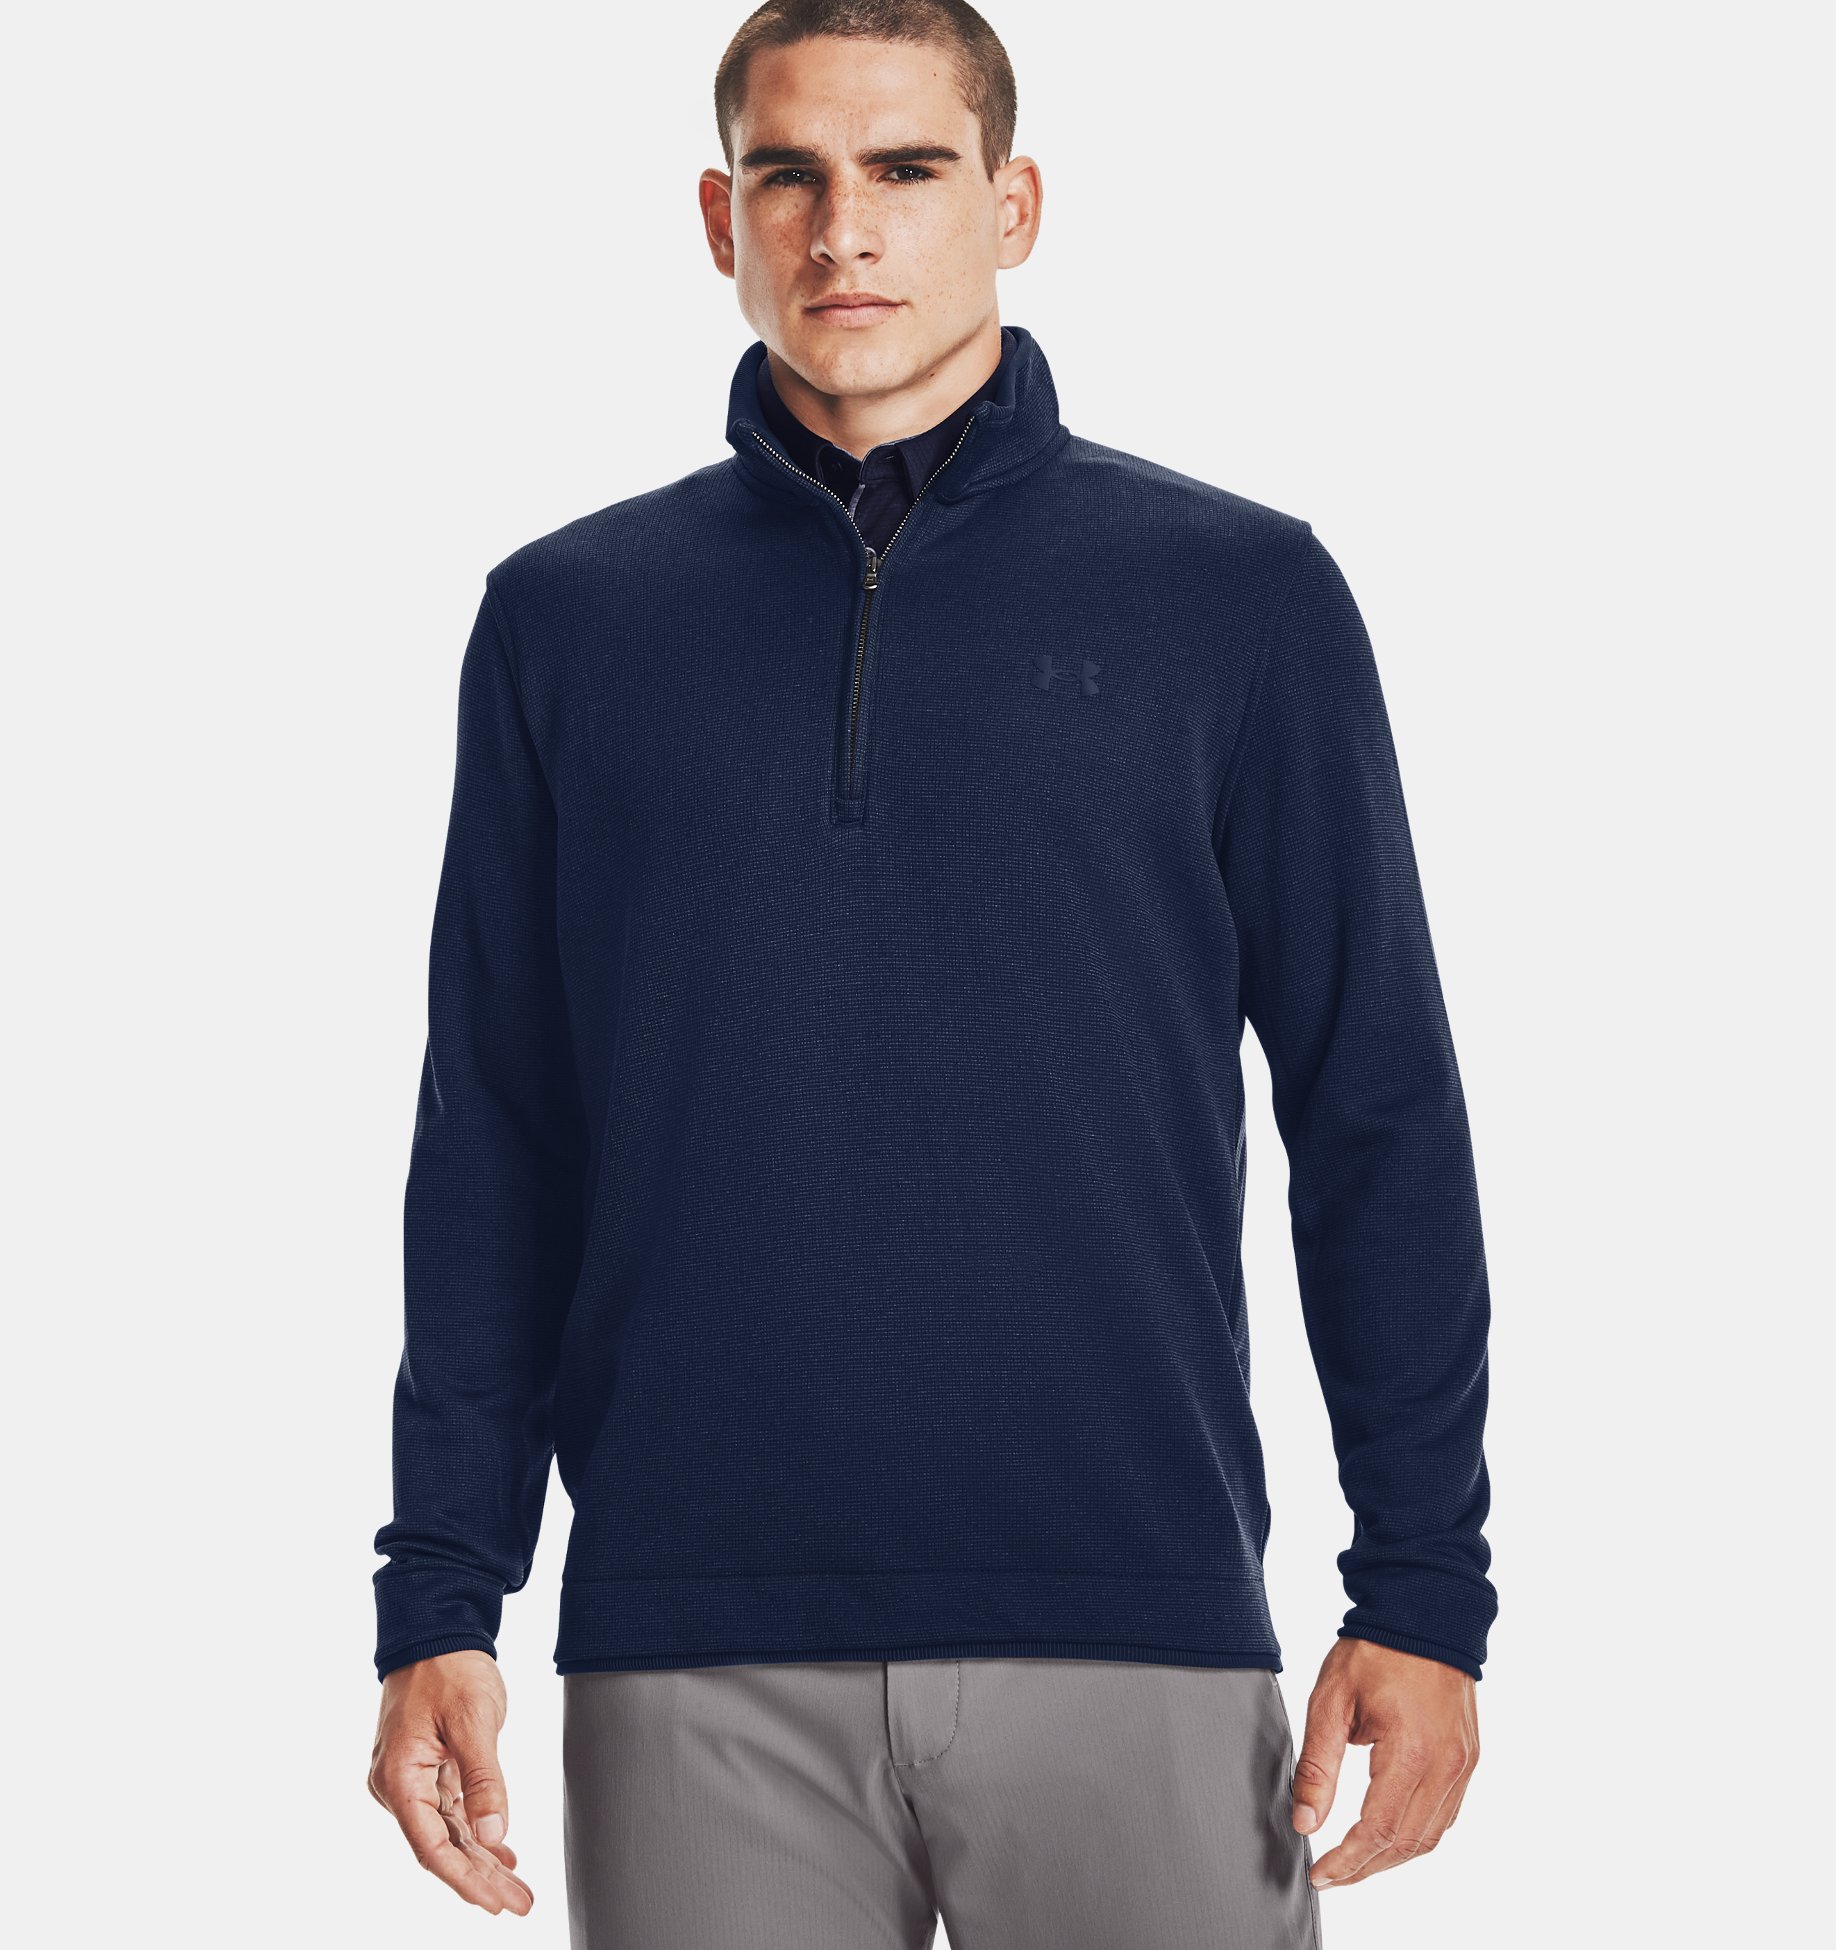 Navy Blue S discount 72% Lefties sweatshirt MEN FASHION Jumpers & Sweatshirts Hoodless 